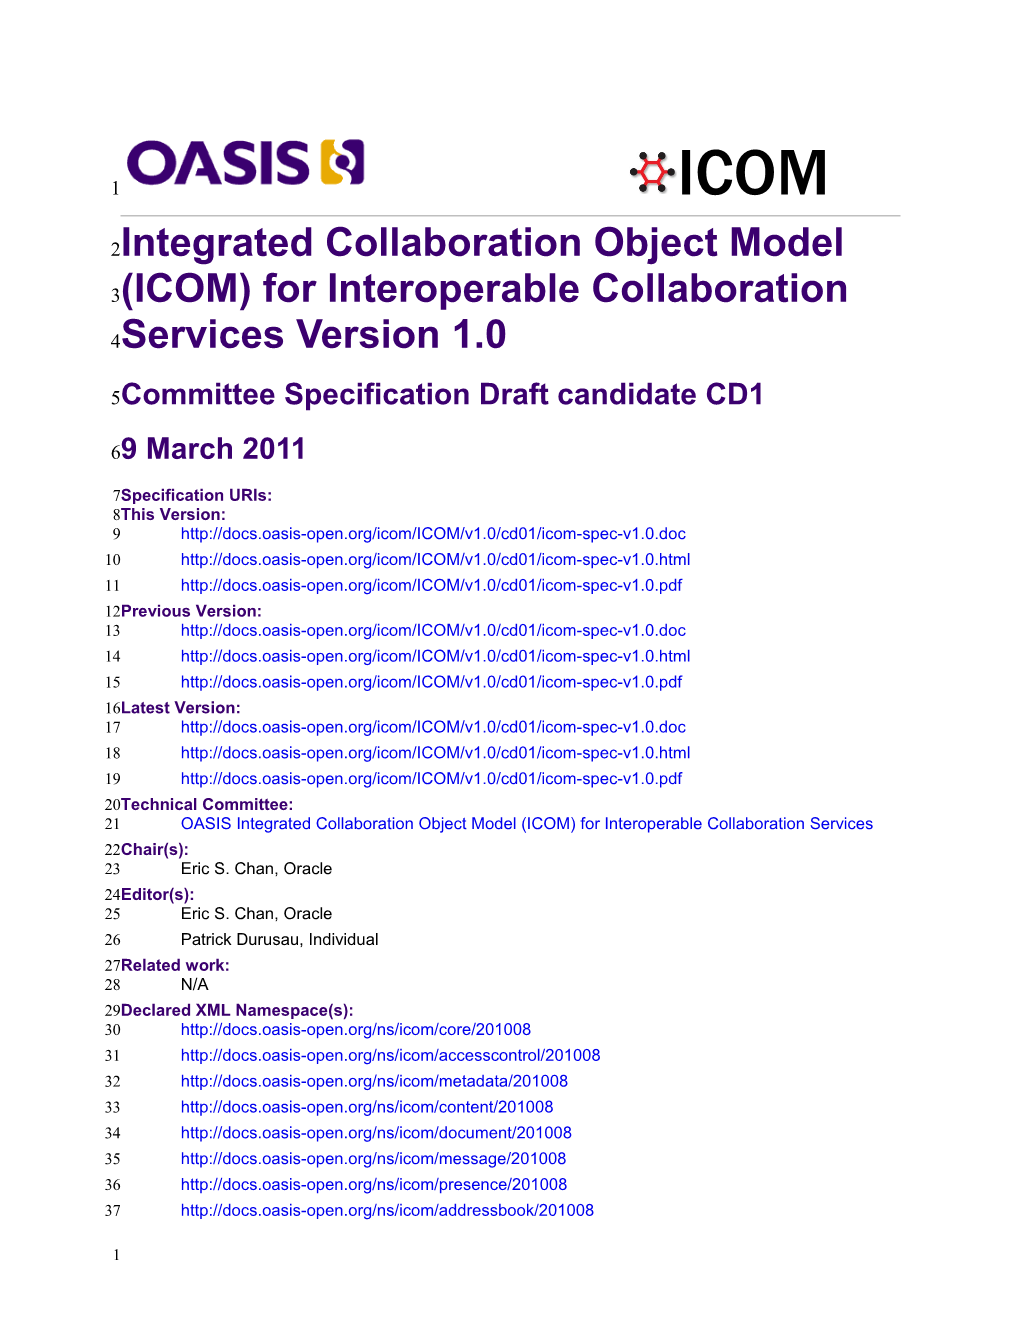 OASIS ICOM Version 1.0